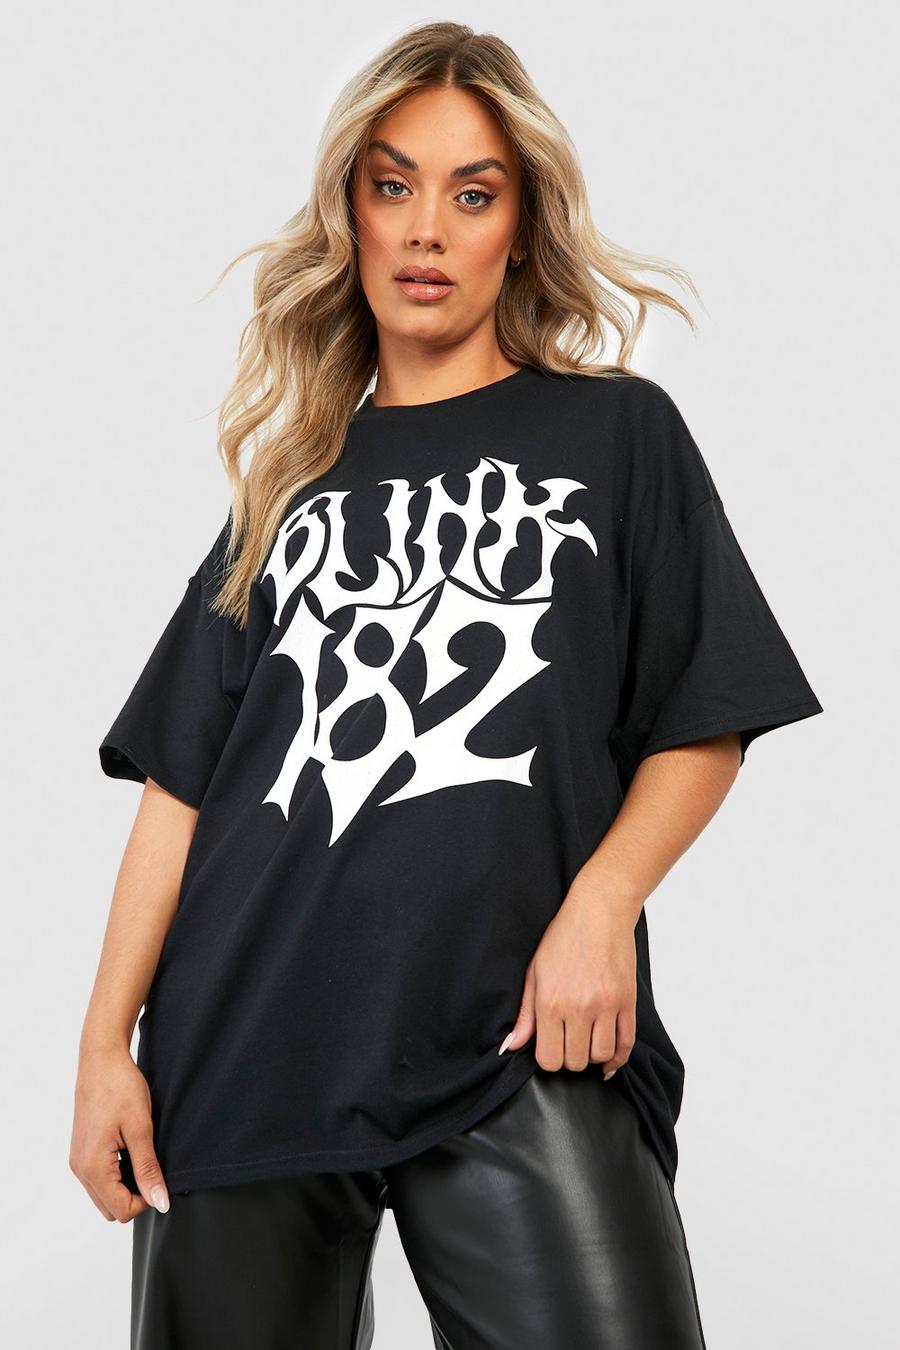 Black noir Plus Oversized Gelicenseerd Blink 182 T-Shirt